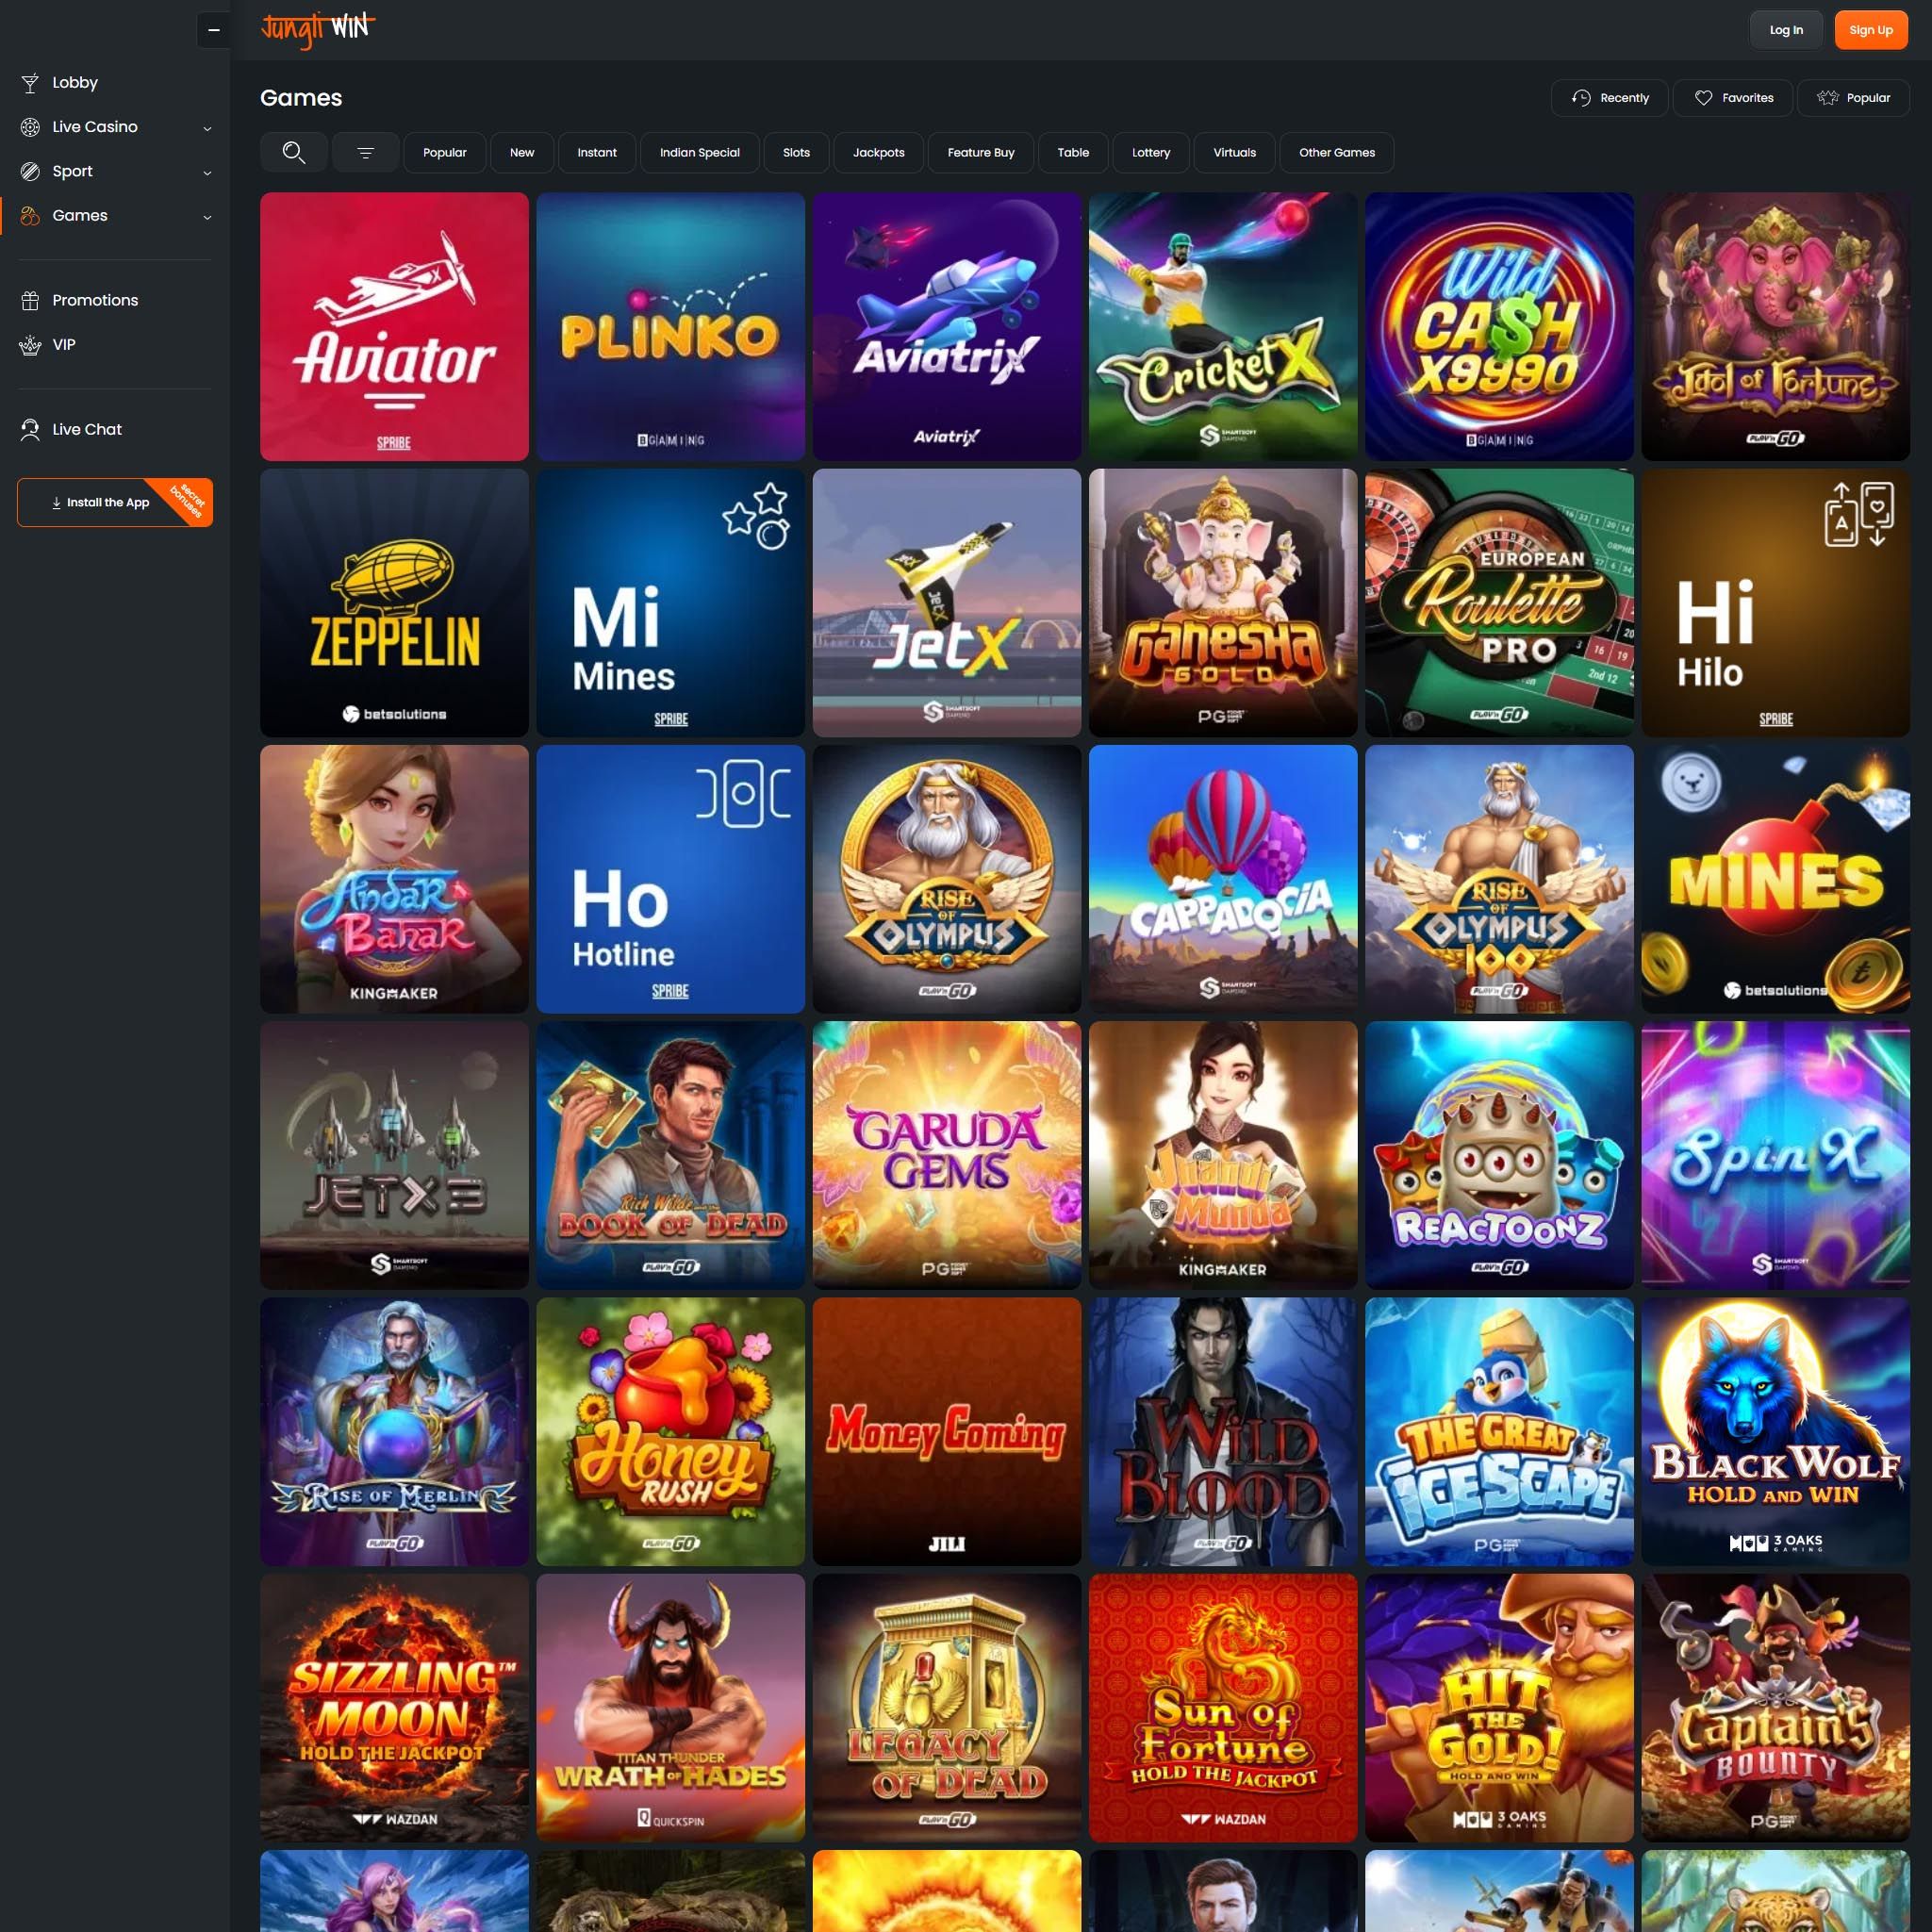 Jungliwin Casino full games catalogue